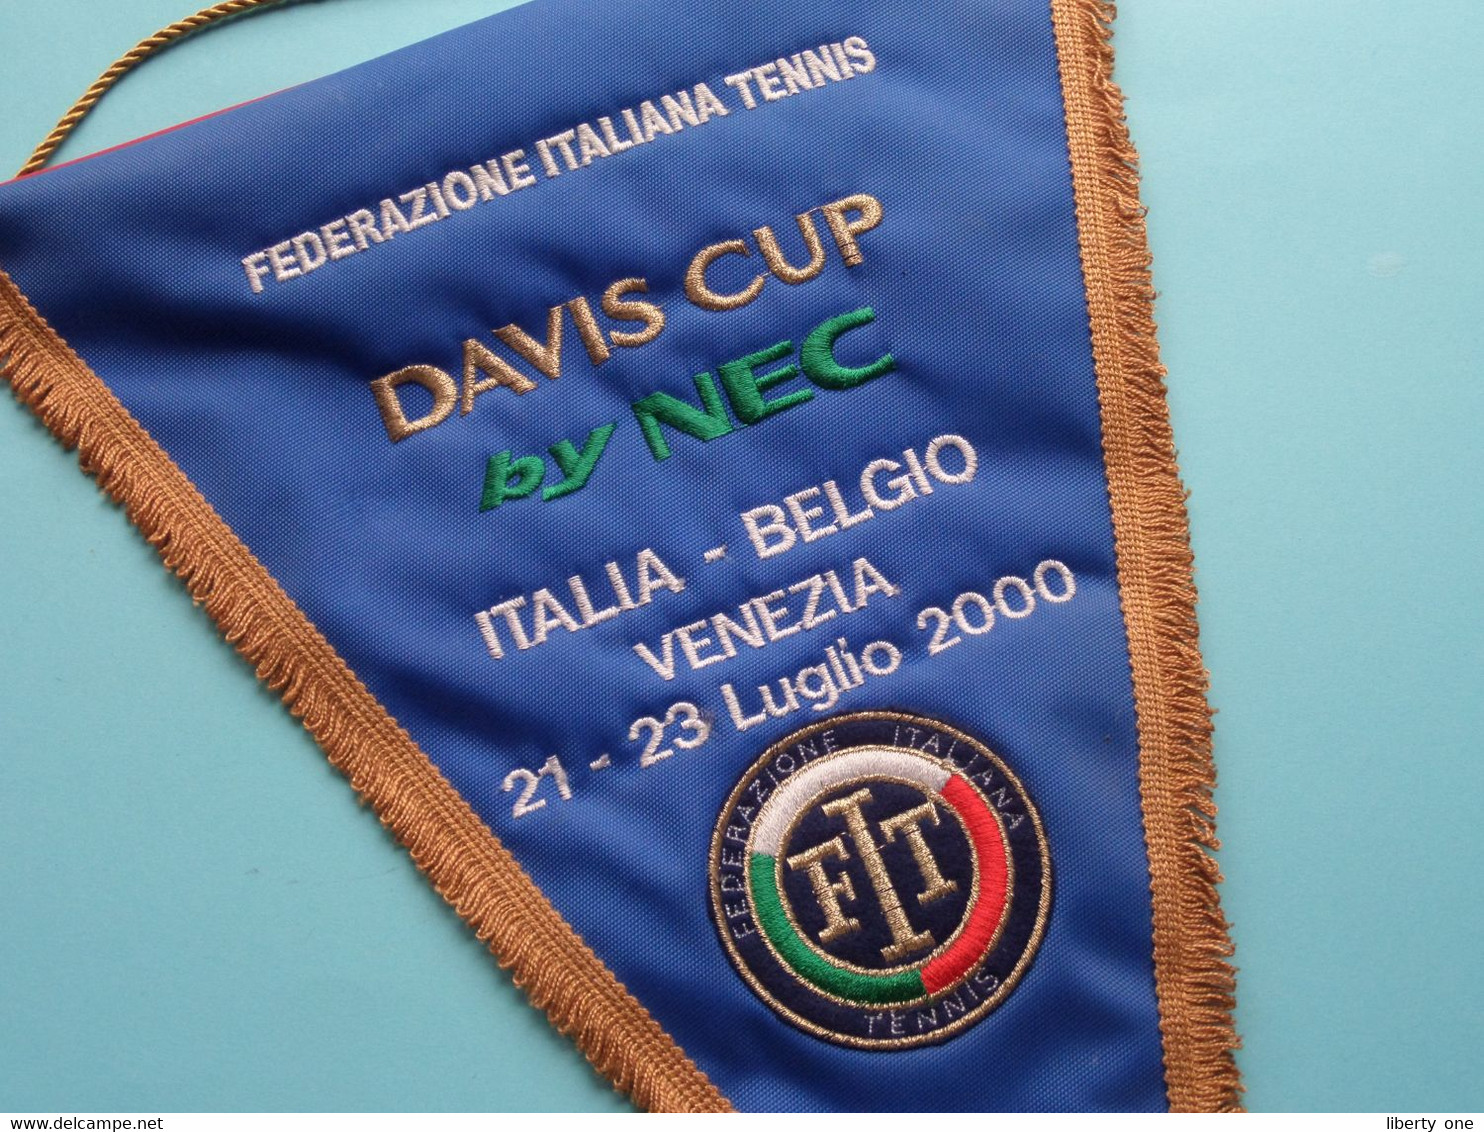 Federazione ITALIANA Tennis DAVIS CUP By NEC - ITALIA / BELGIO - 2000 ( See / Voir SCAN ) Wimpel - Pennant - Fanion ! - Uniformes Recordatorios & Misc